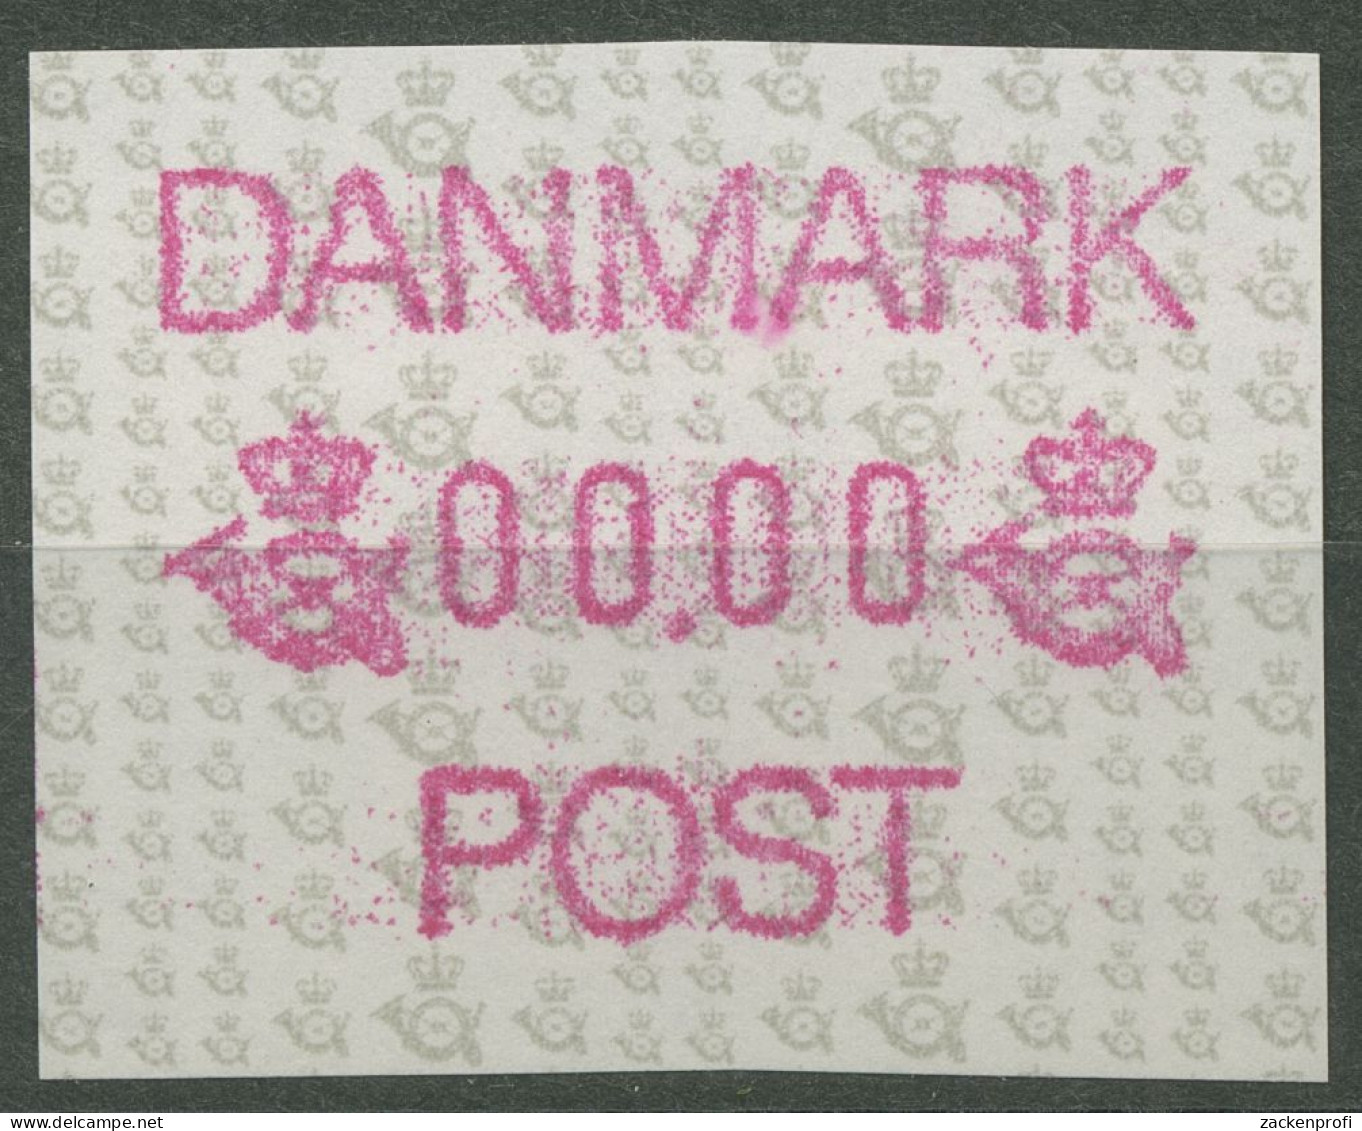 Dänemark ATM 1990 Postembleme 0000-Druck ATM 1 I Postfrisch - Automaatzegels [ATM]